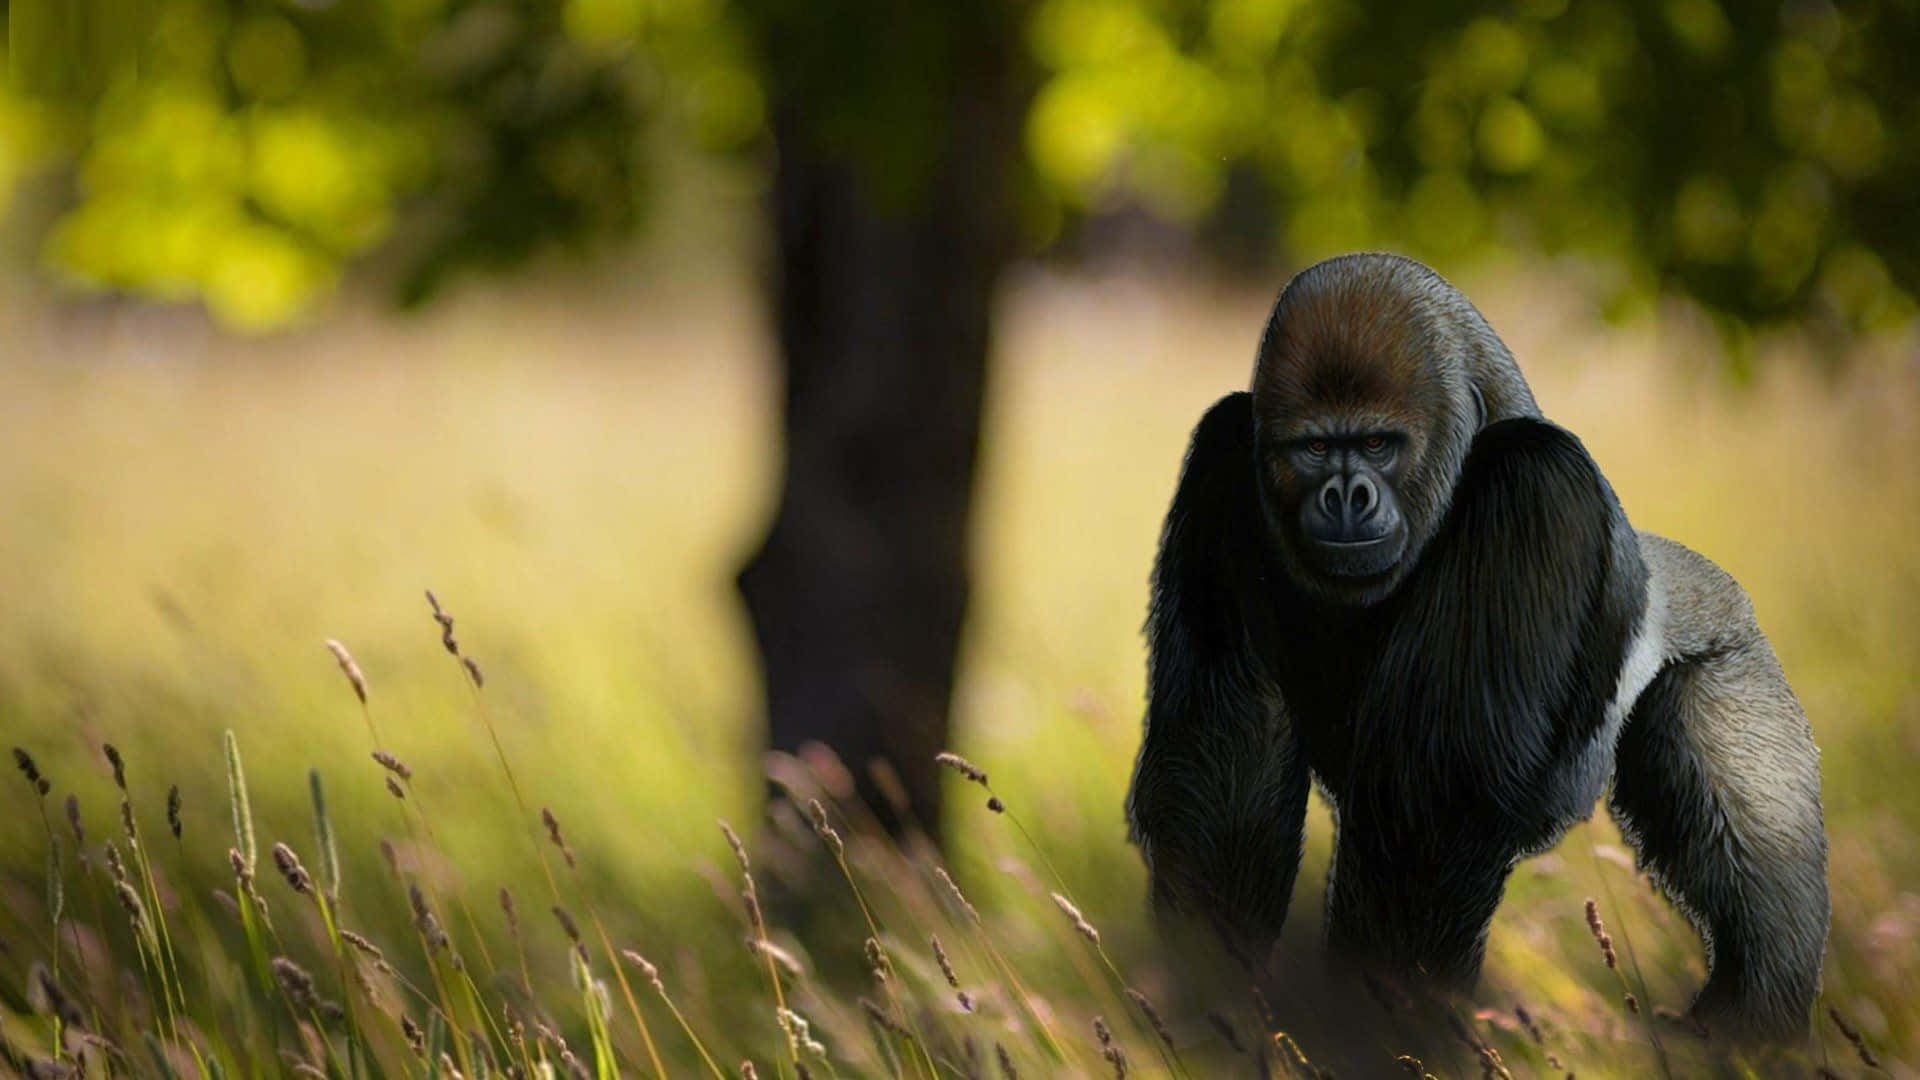 Best Gorilla Background In The Forest Background